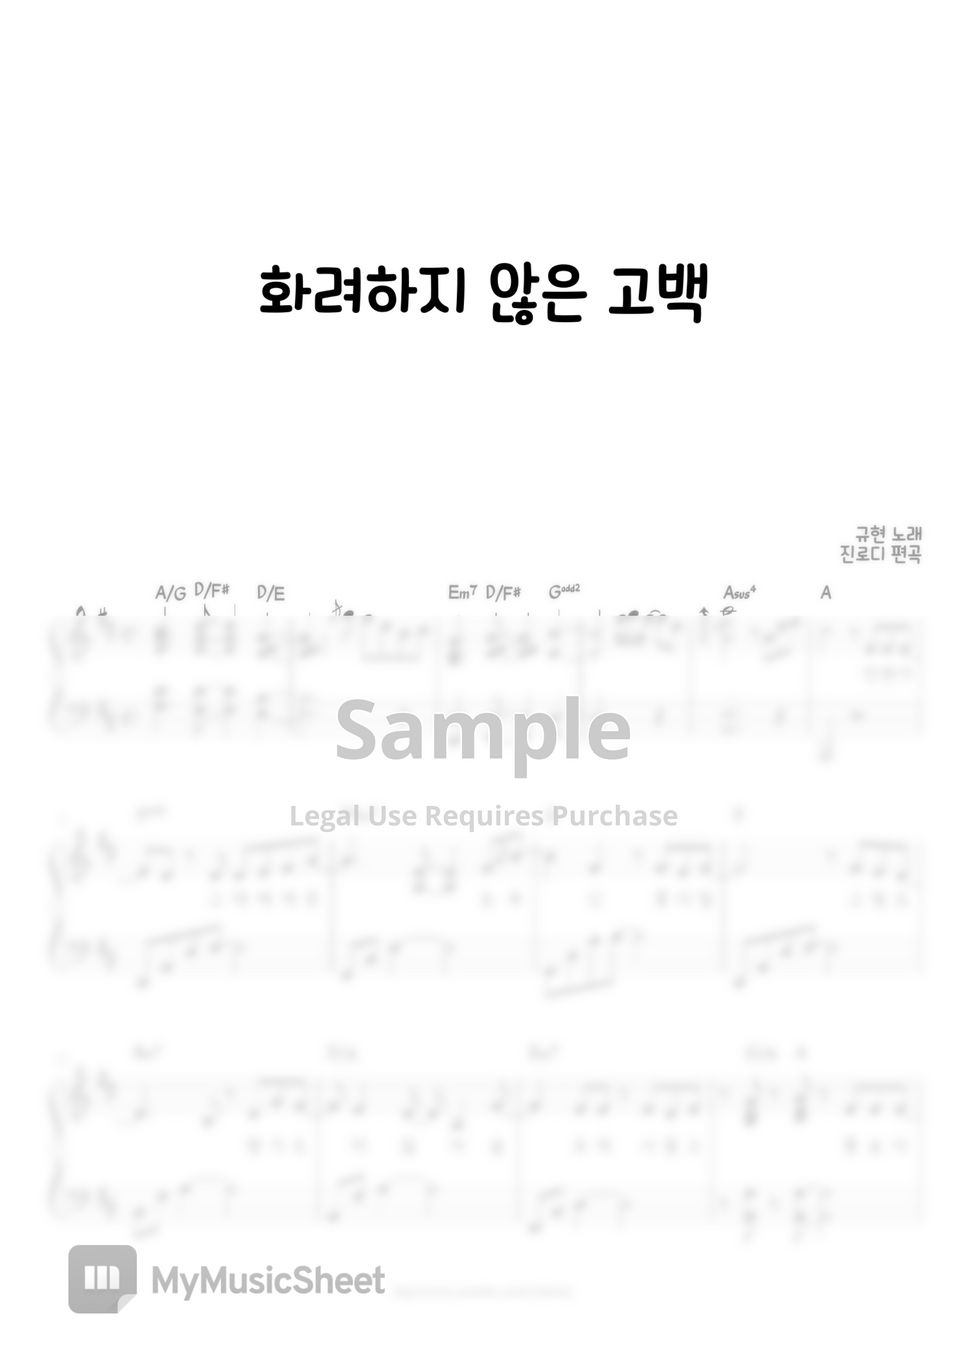 KYUHYUN - Confession is not Flashy (hospitalplaylist) by jinlody